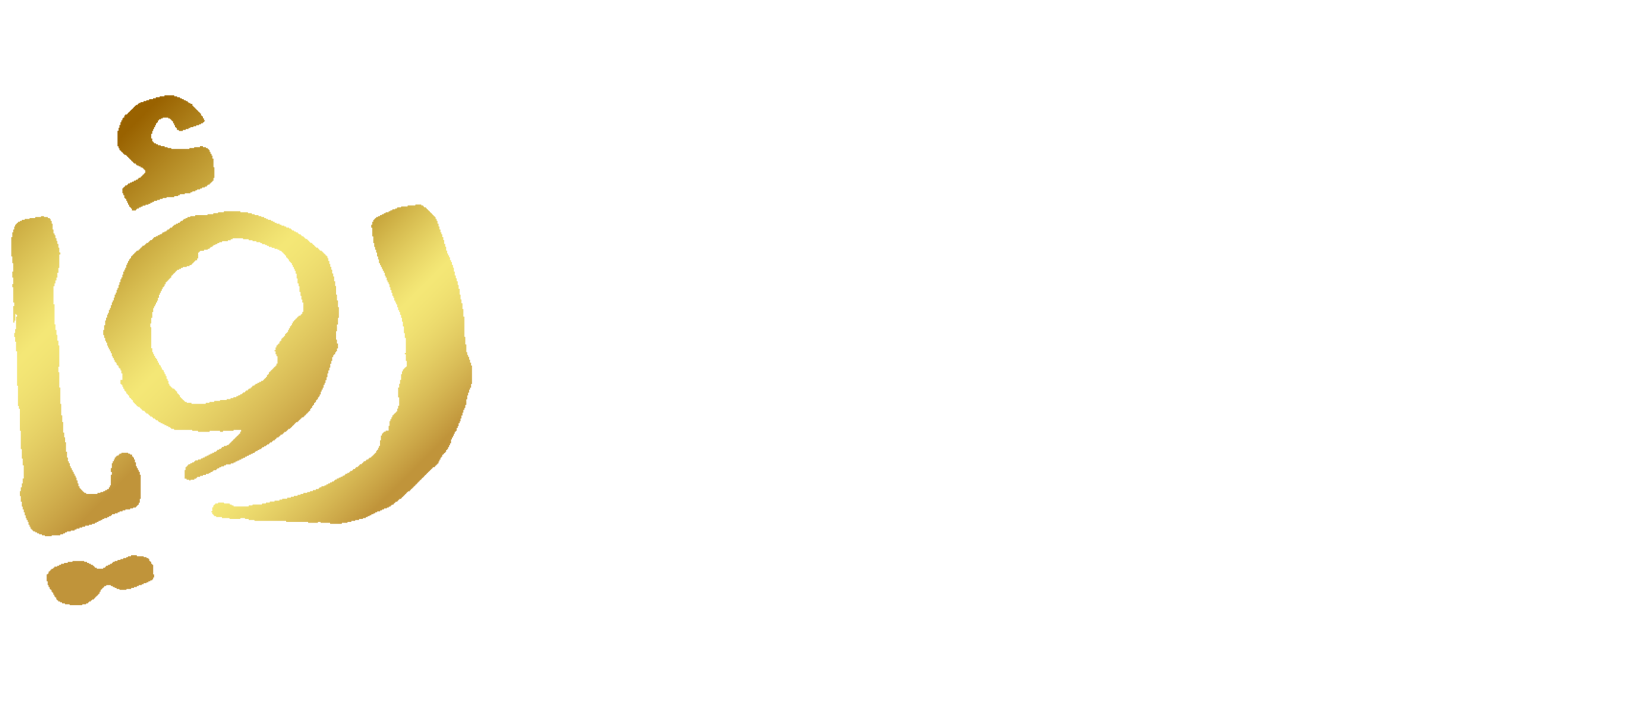 فتره حكم ضعف اذهب  Roya Media Group